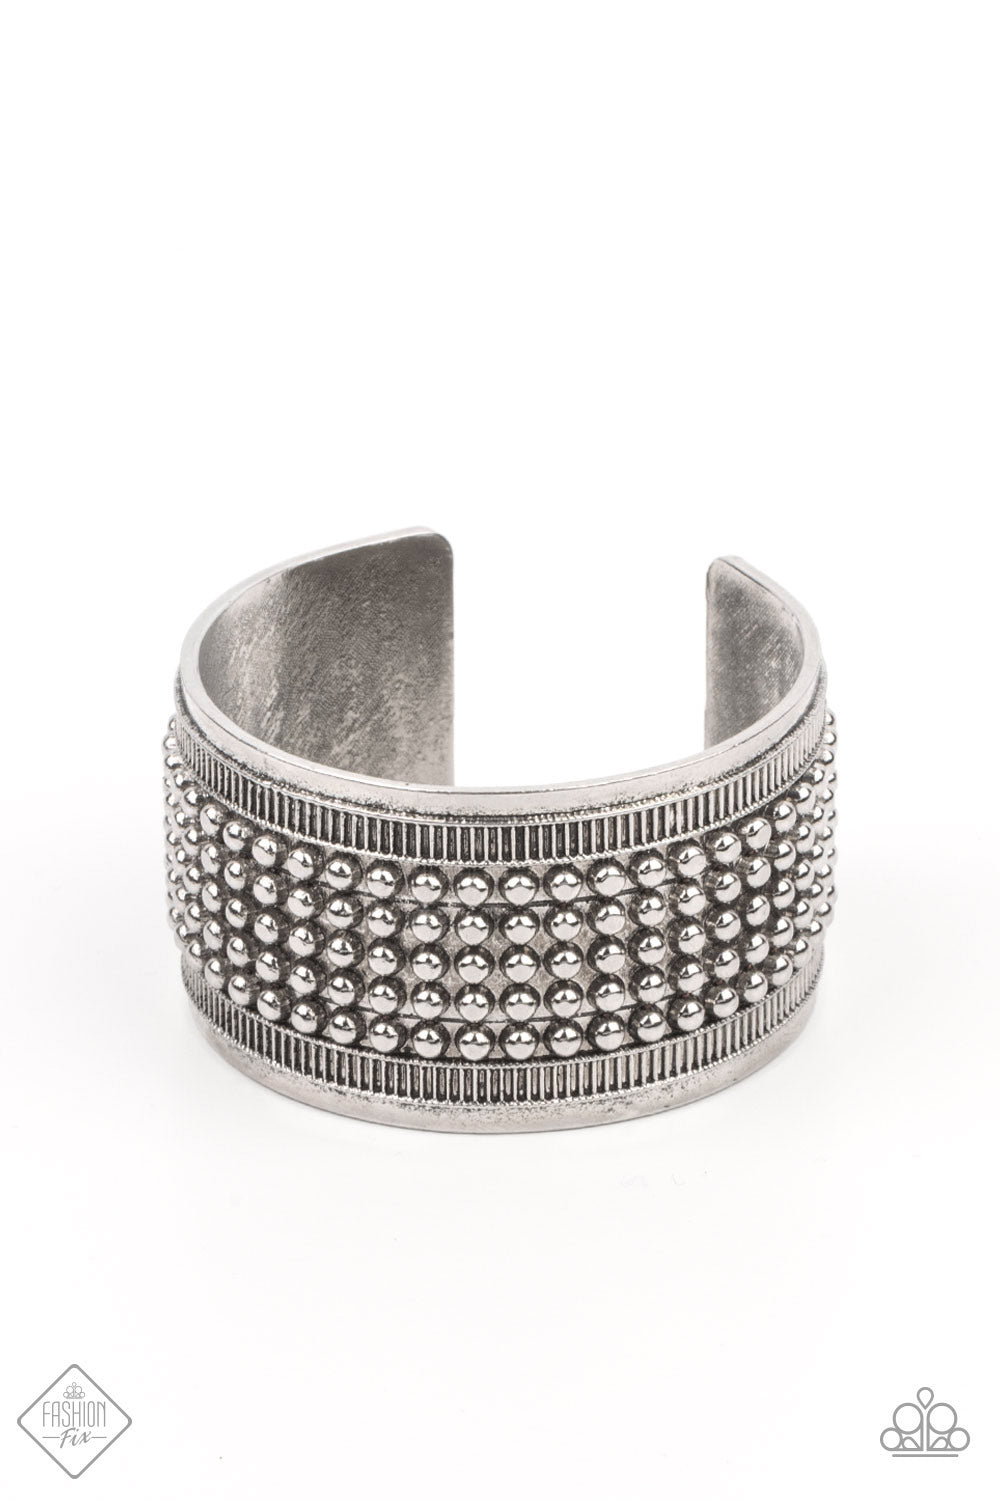 Bronco Bust - Silver - April 2021 Paparazzi Fashion Fix Bracelet